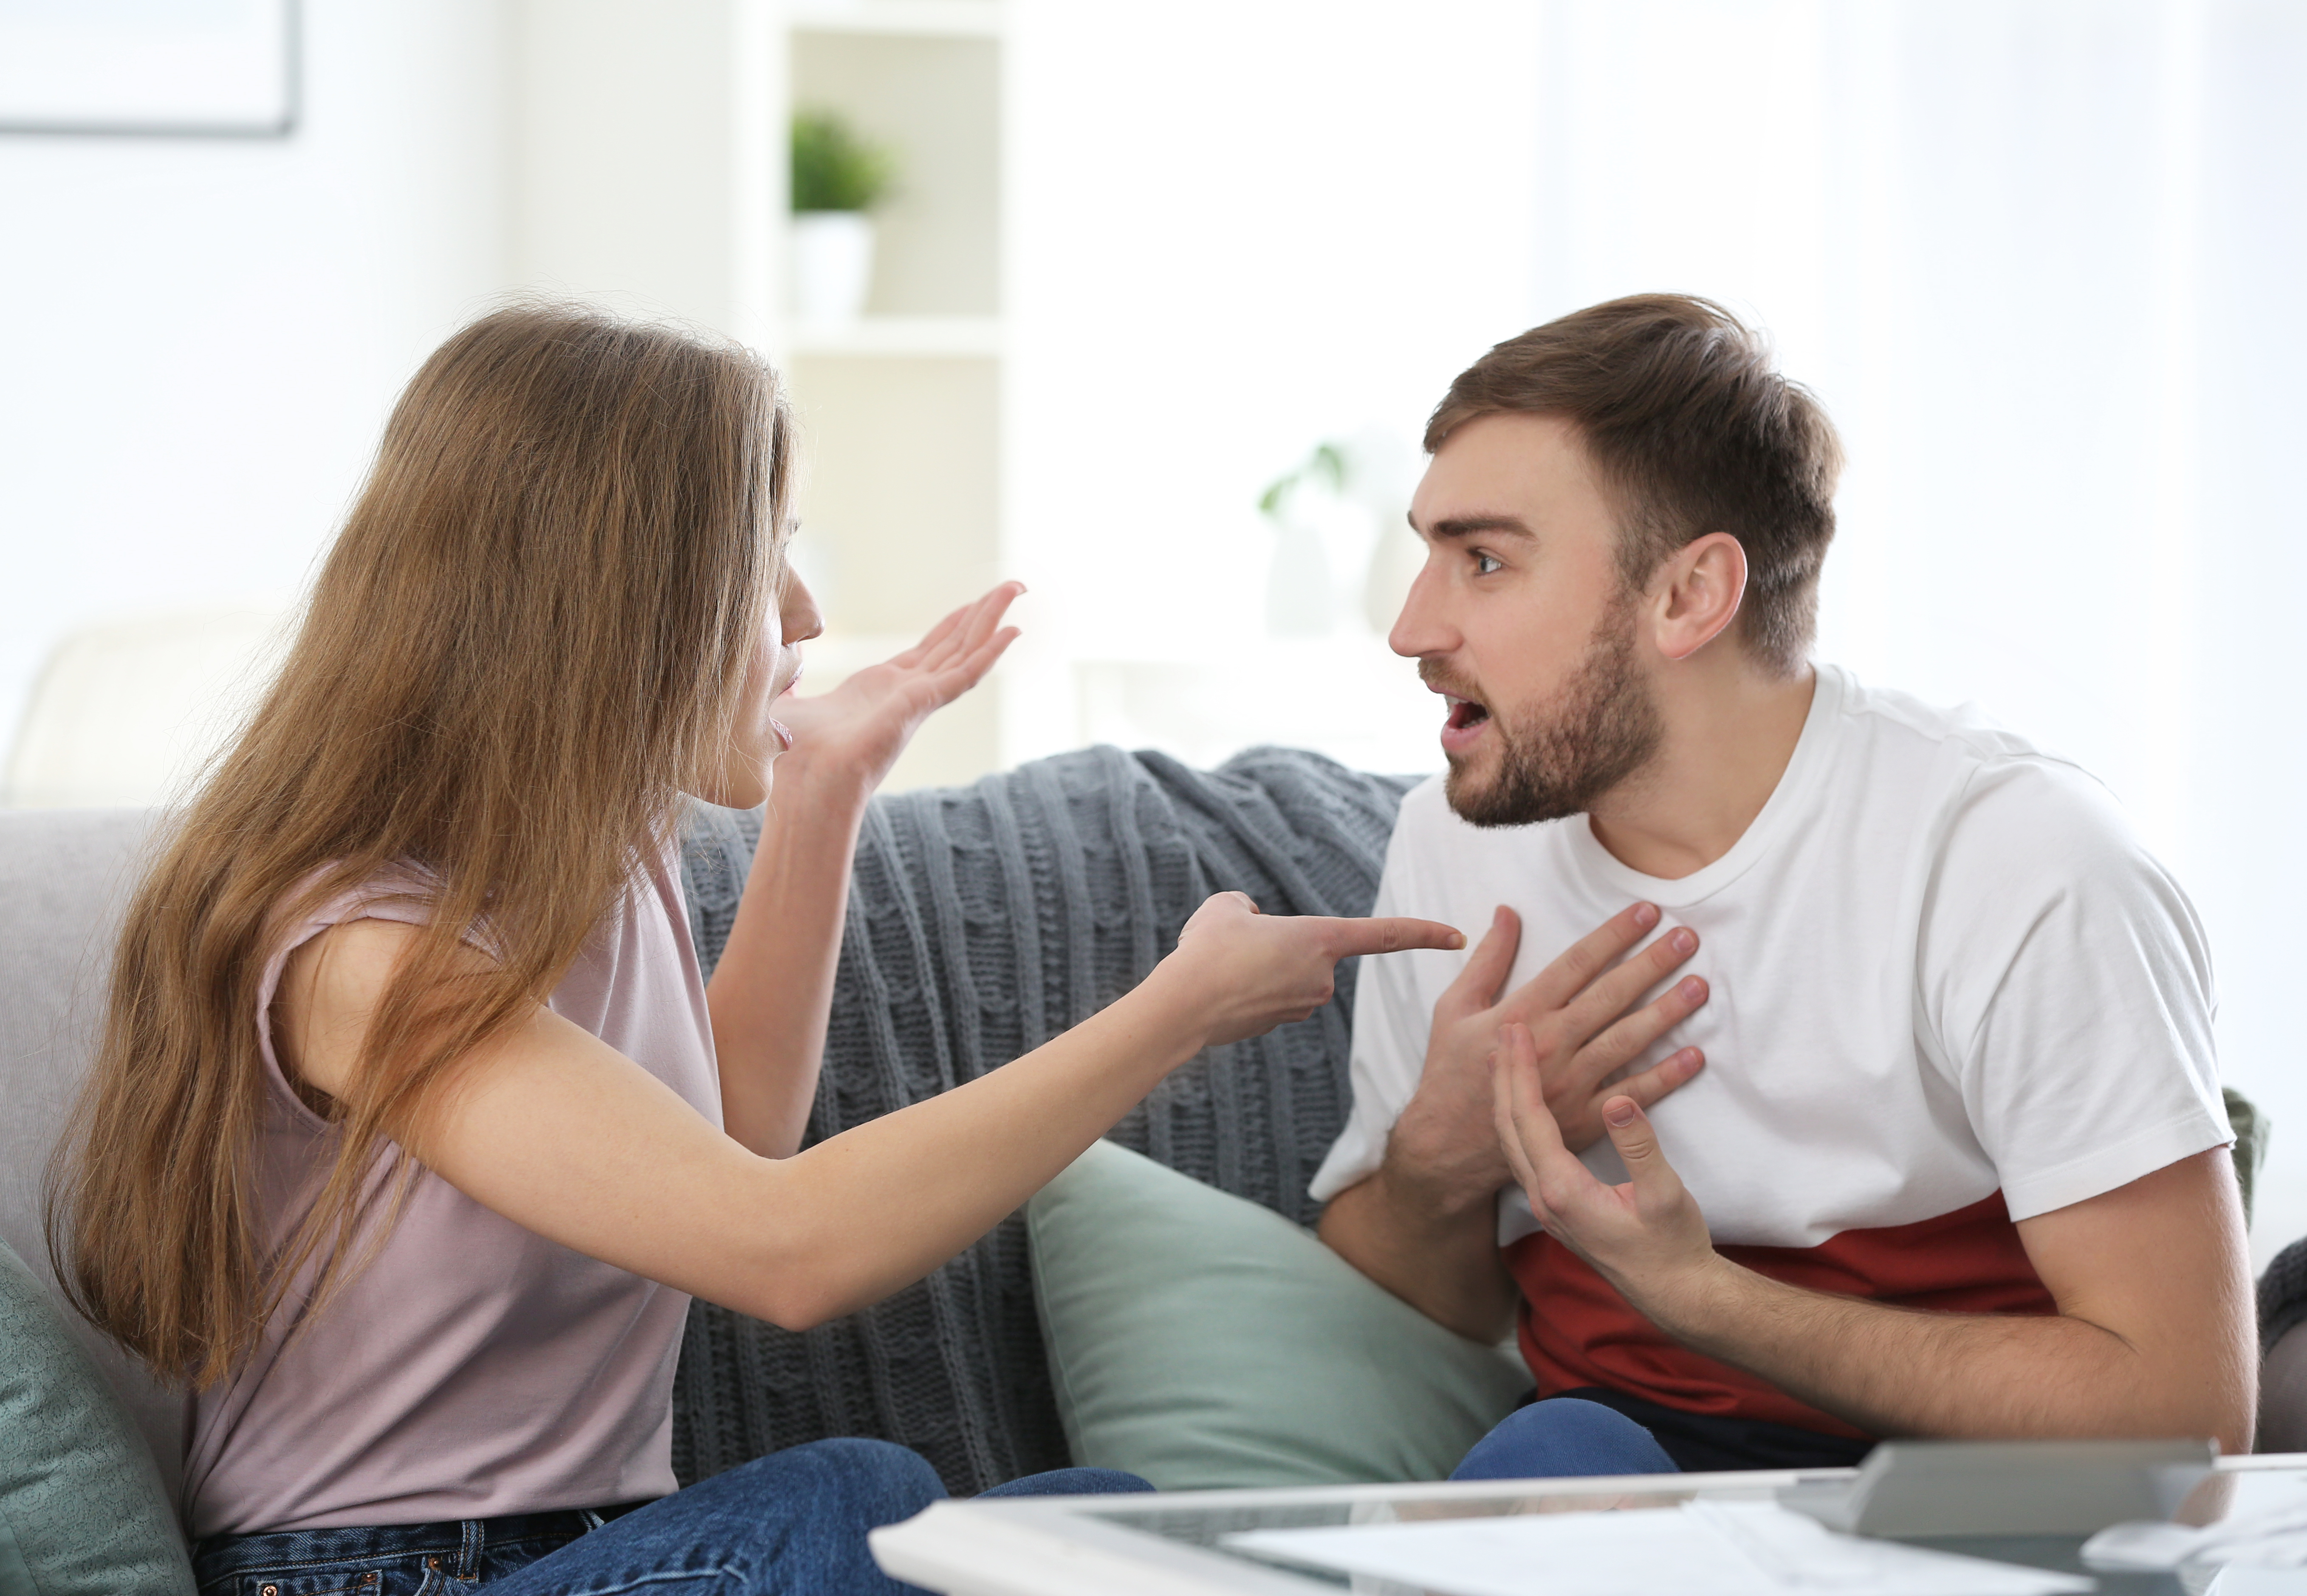 A couple arguing | Source: Shutterstock